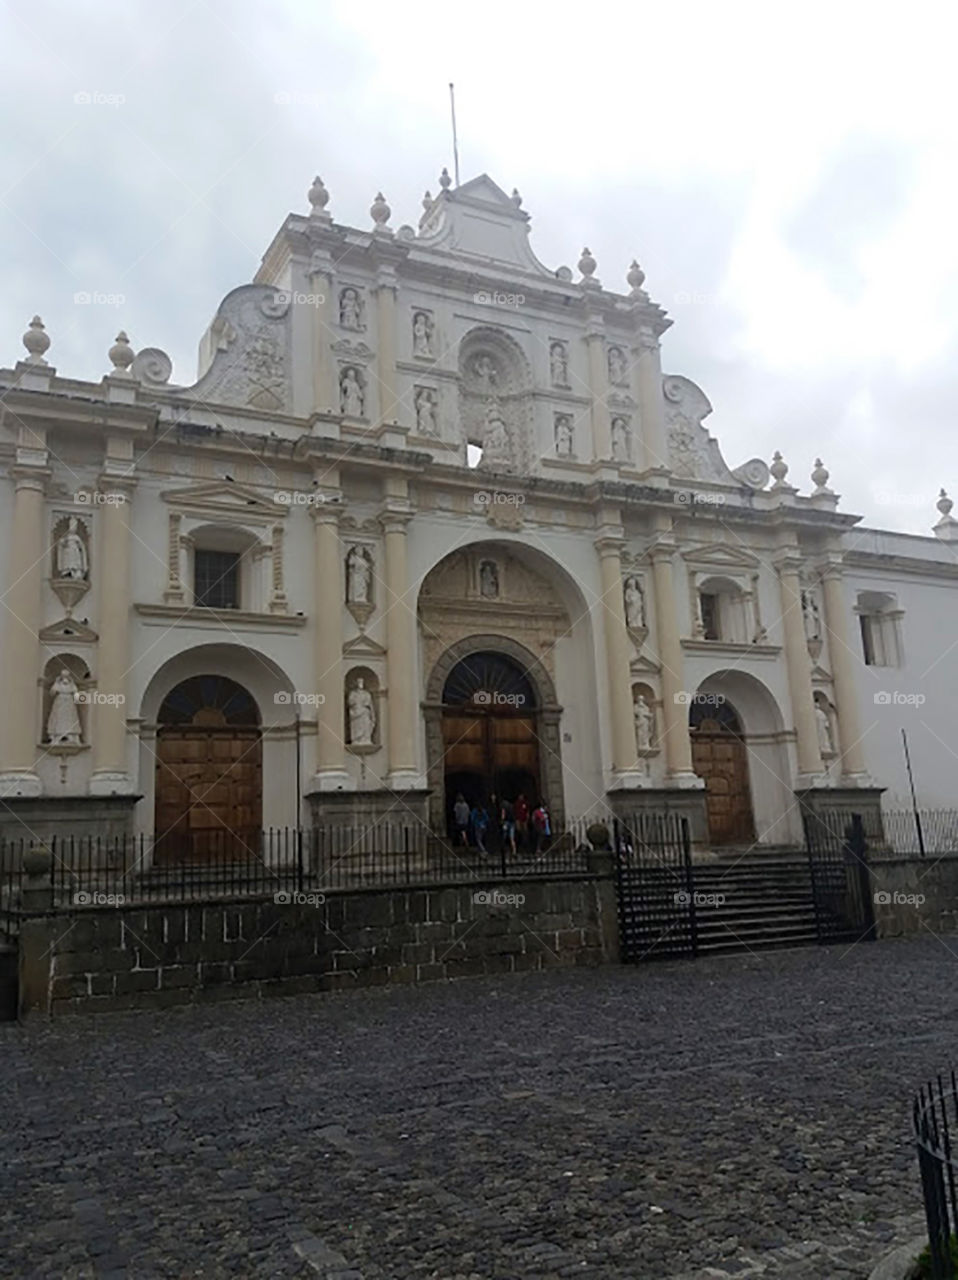 Antigua Guatemala and its churches